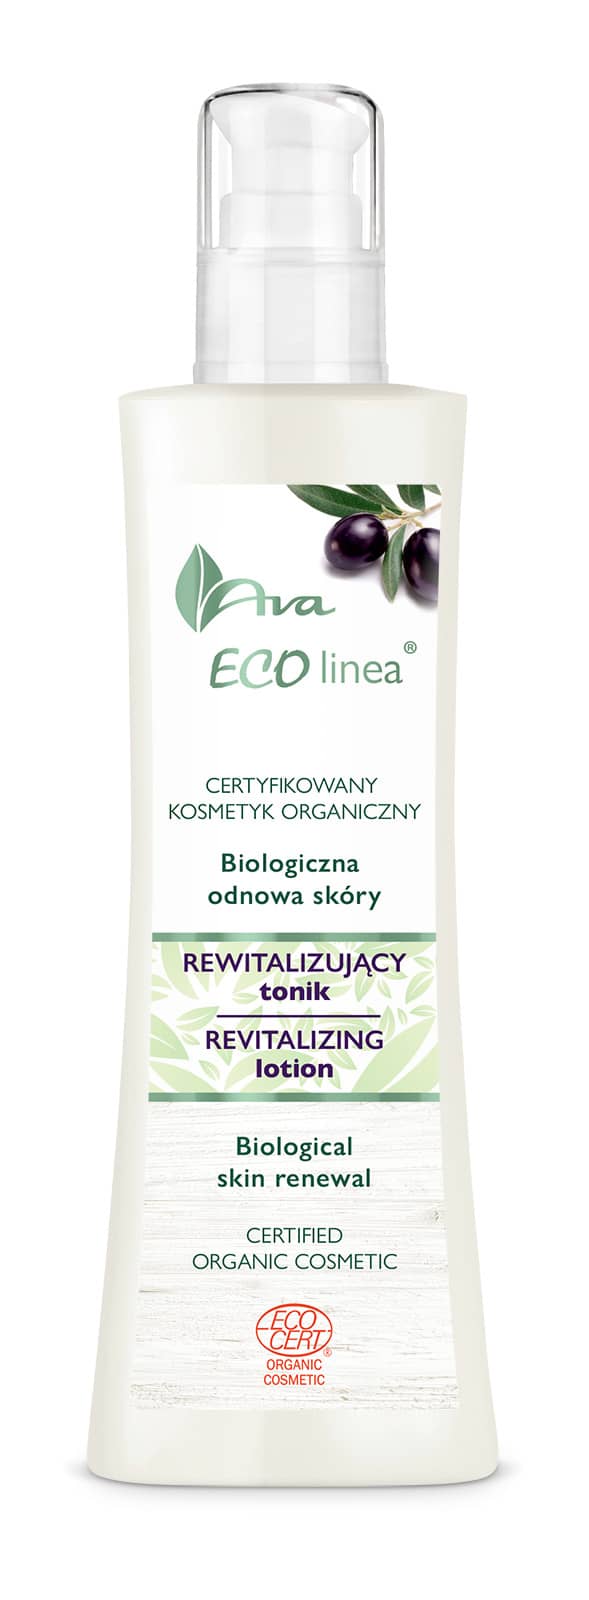 ECO LINEA Revitalizing non alcohol lotion